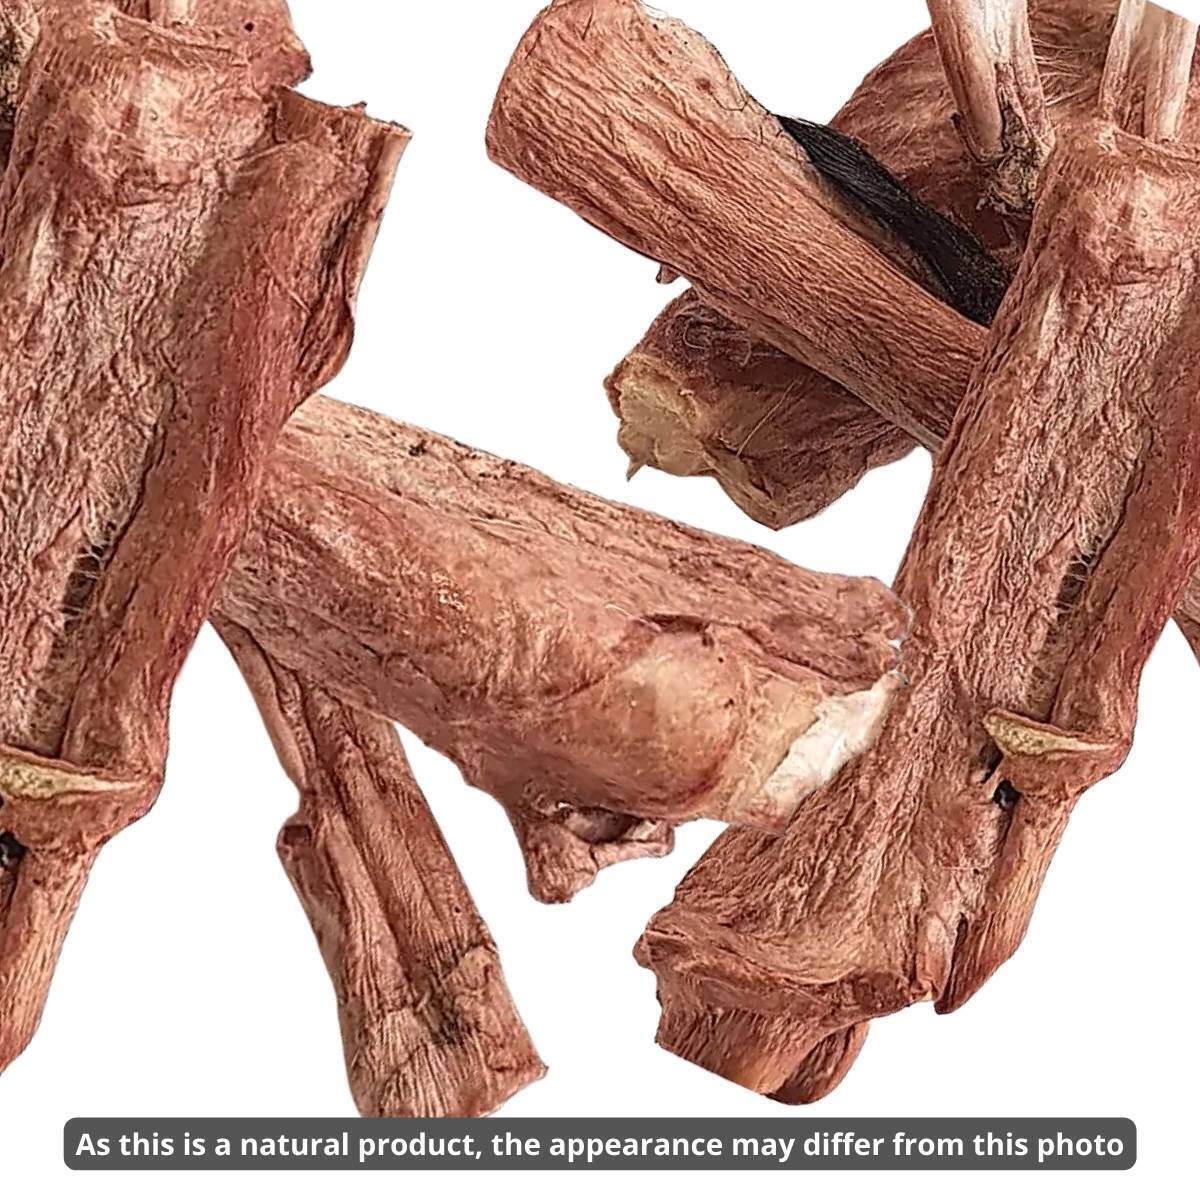 Meaty Treaty Australian Freeze Dried Beef Tendon Dog Treats 70g